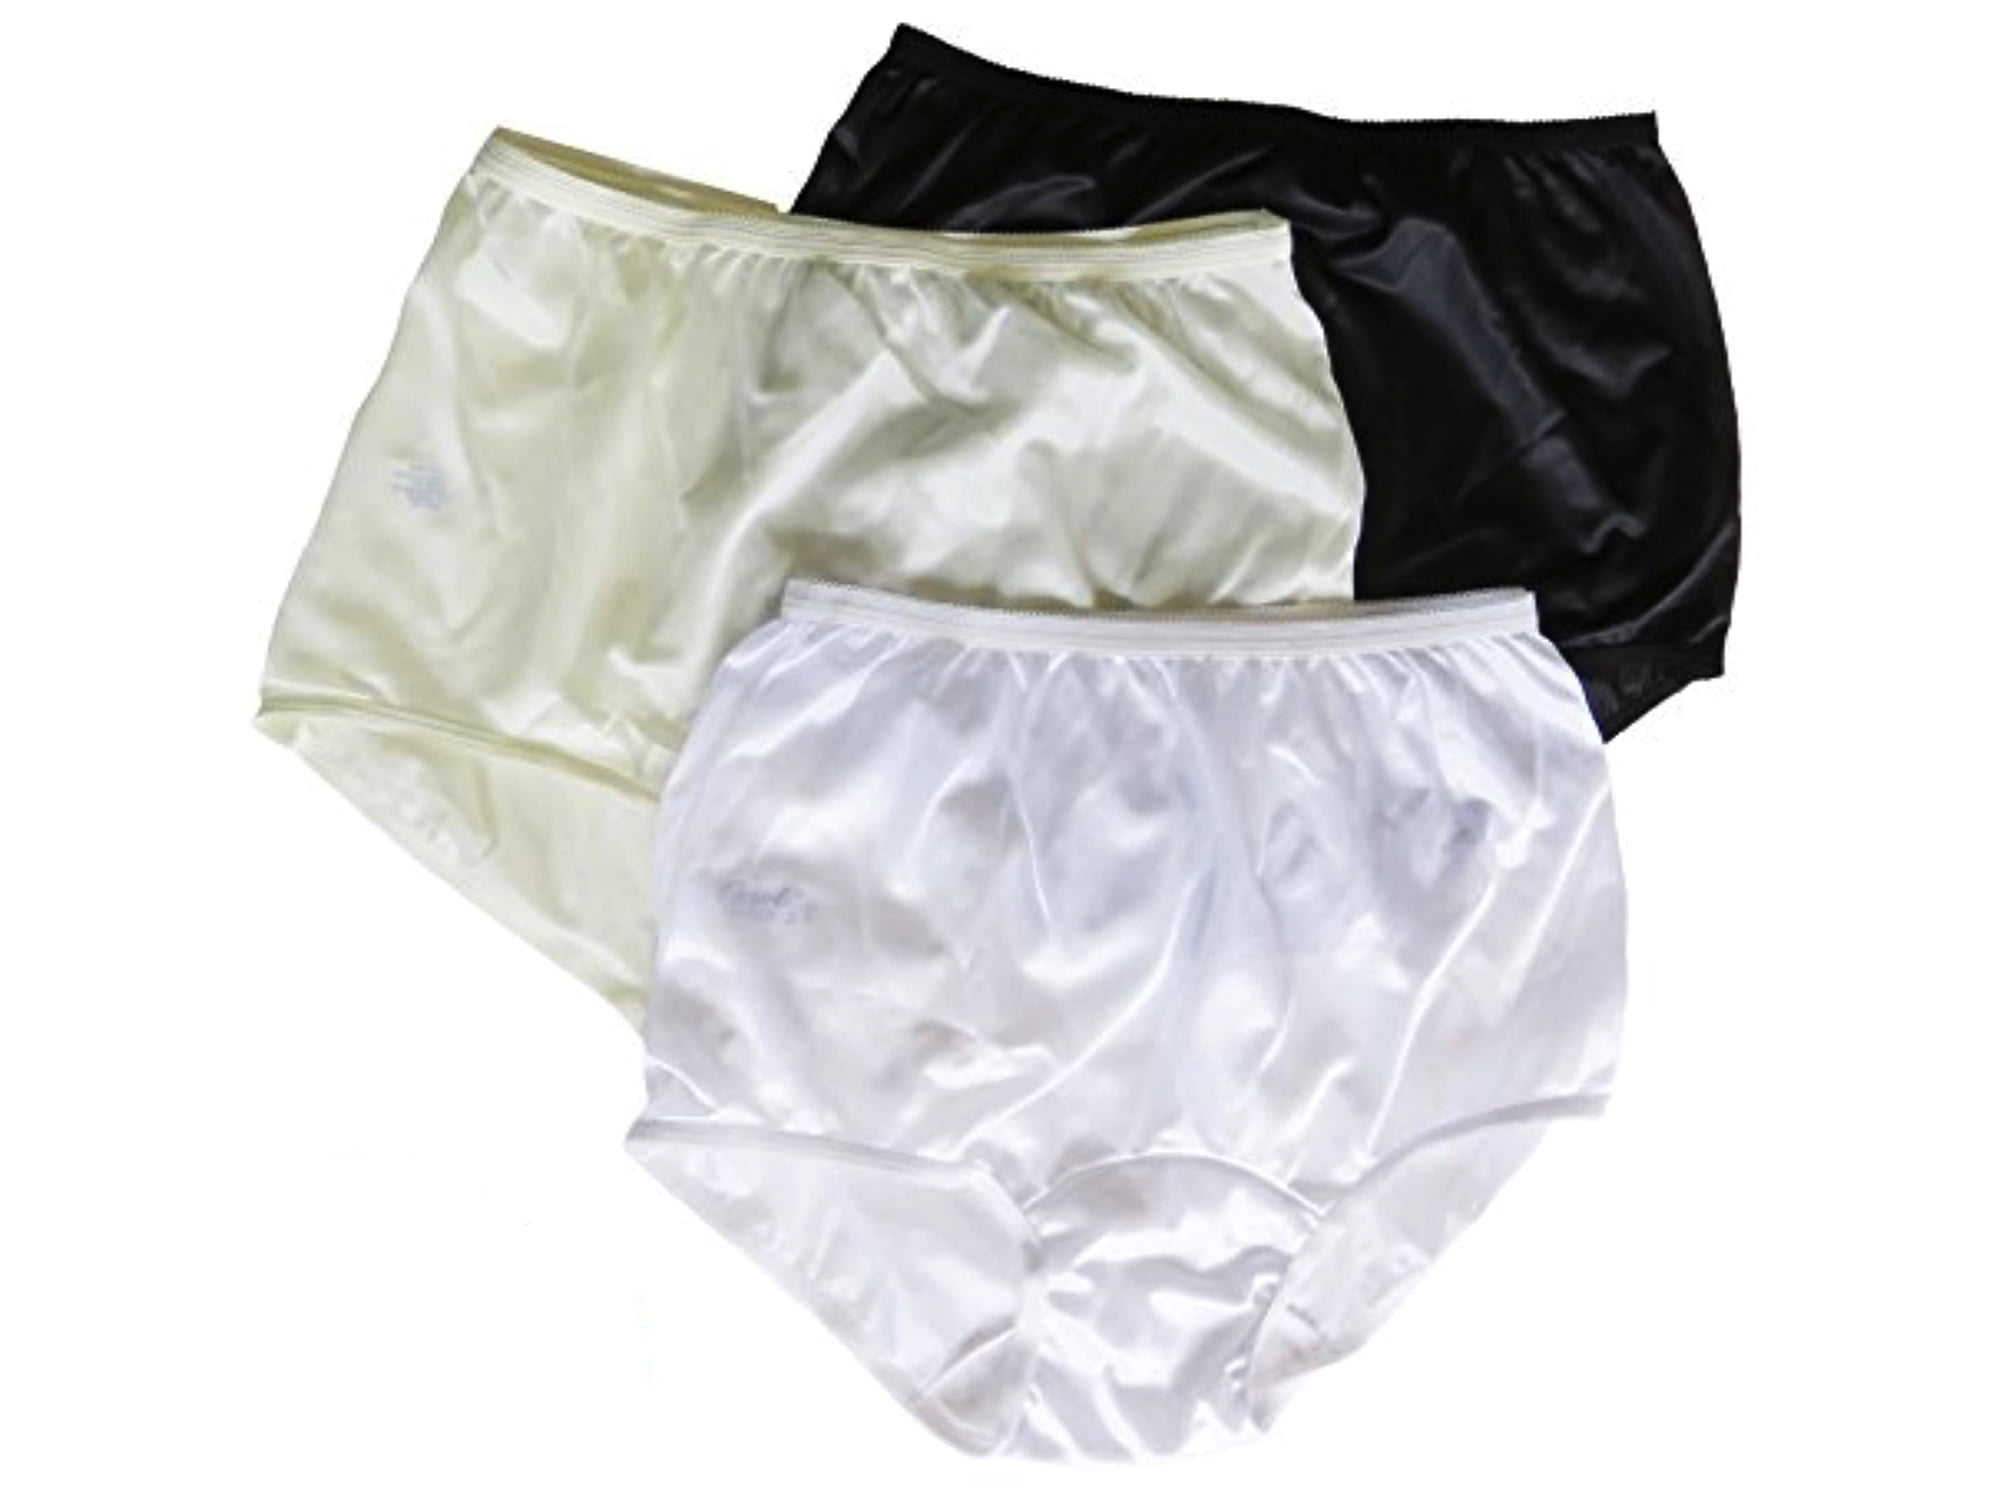 Classic Nylon Panty - Wearever Incontinence - My Pelvic Health